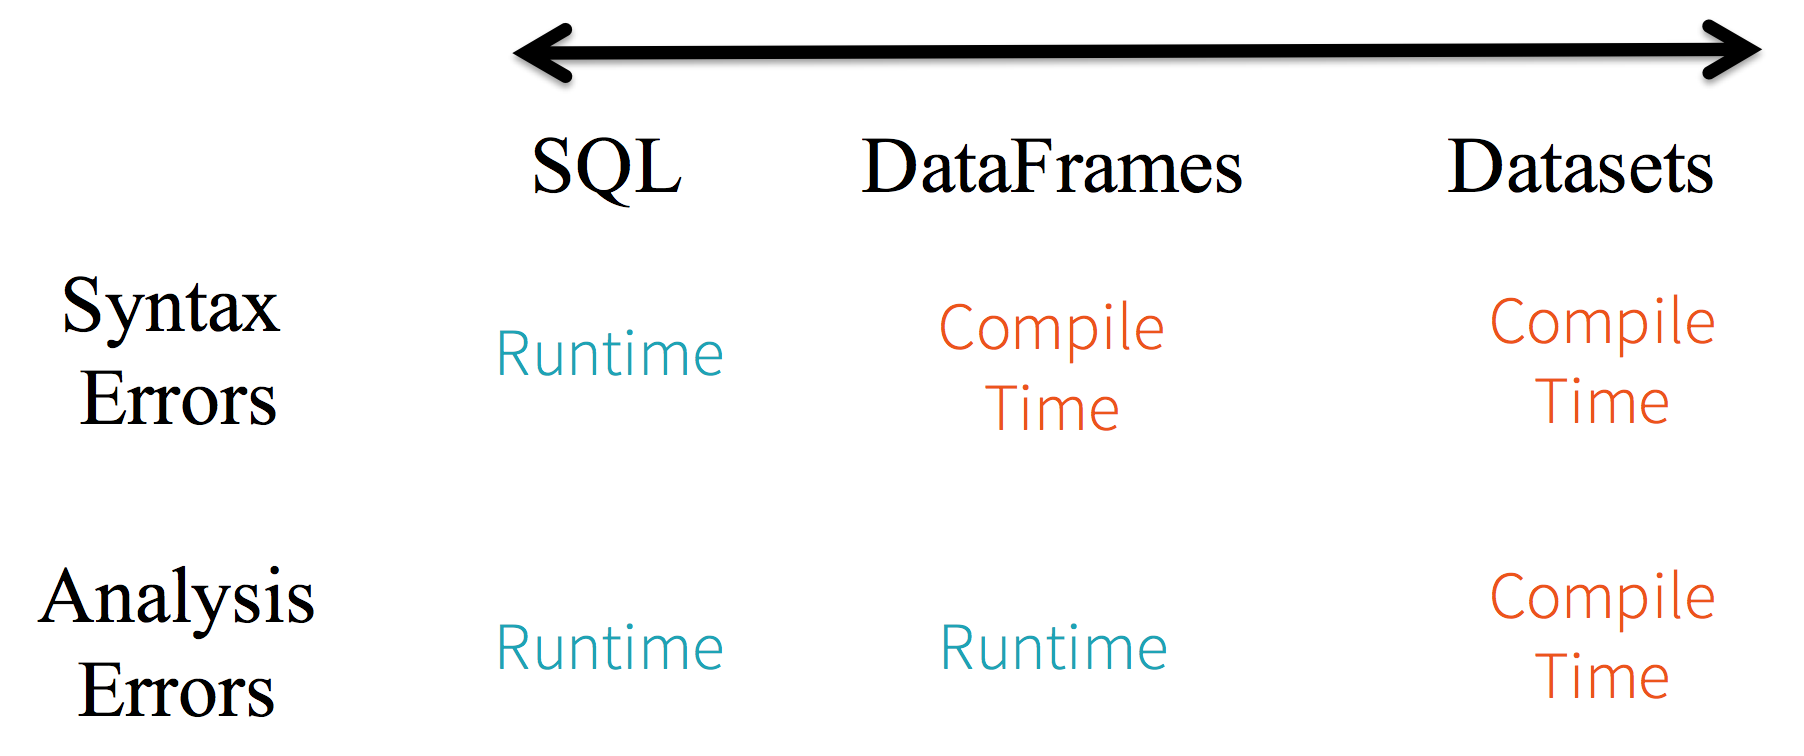 Type-safety spectrum between SQL, DataFrames and Datasets